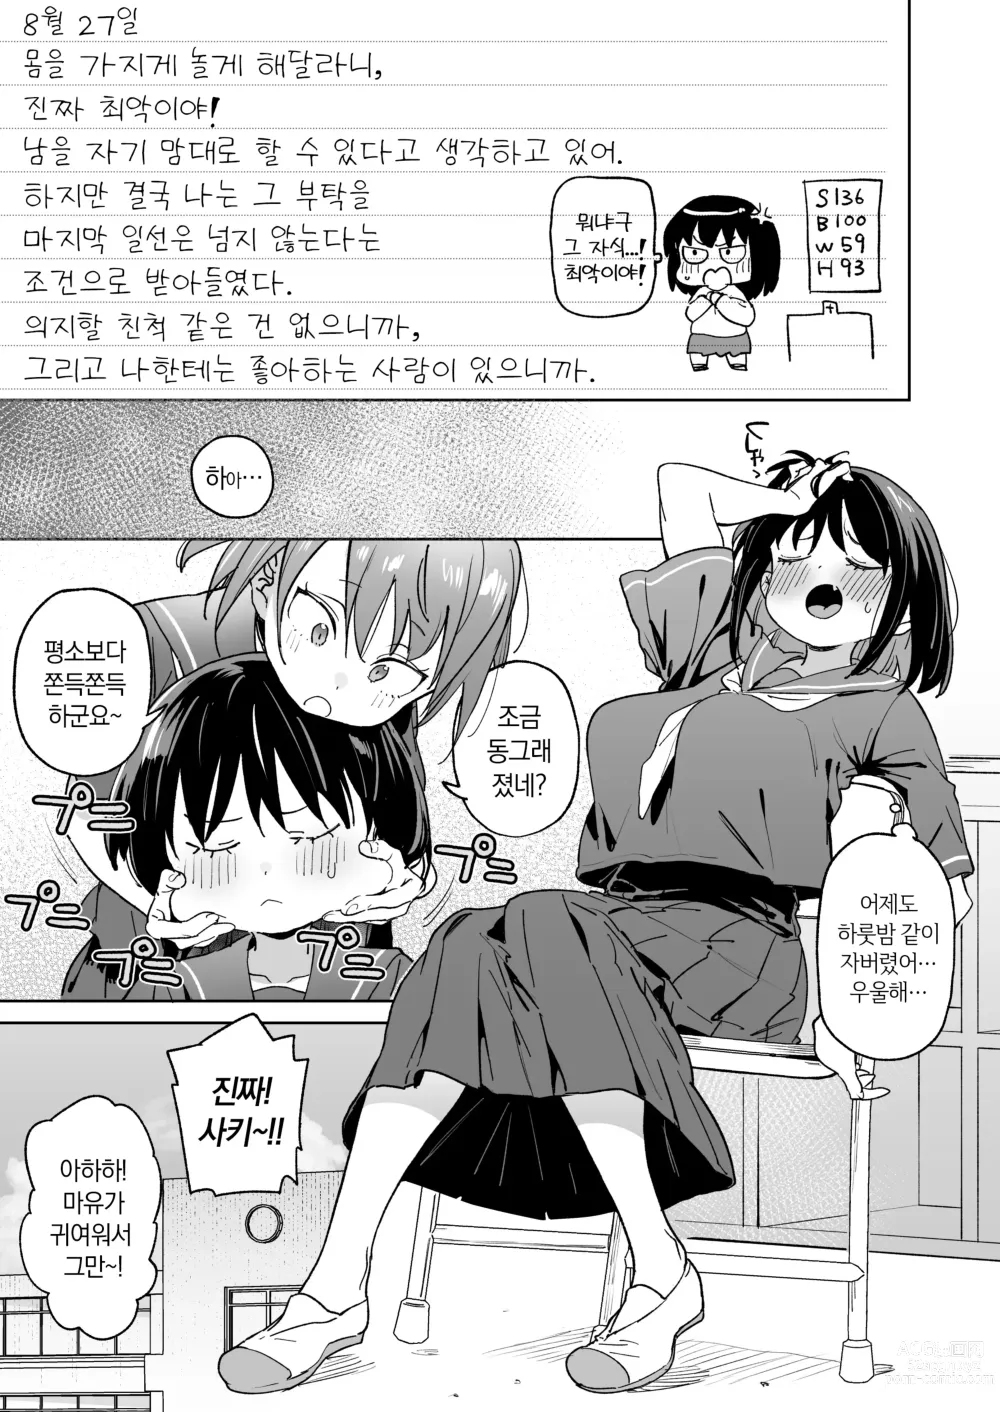 Page 6 of doujinshi 11월 28일 새 아빠의 소유물이 되었습니다.